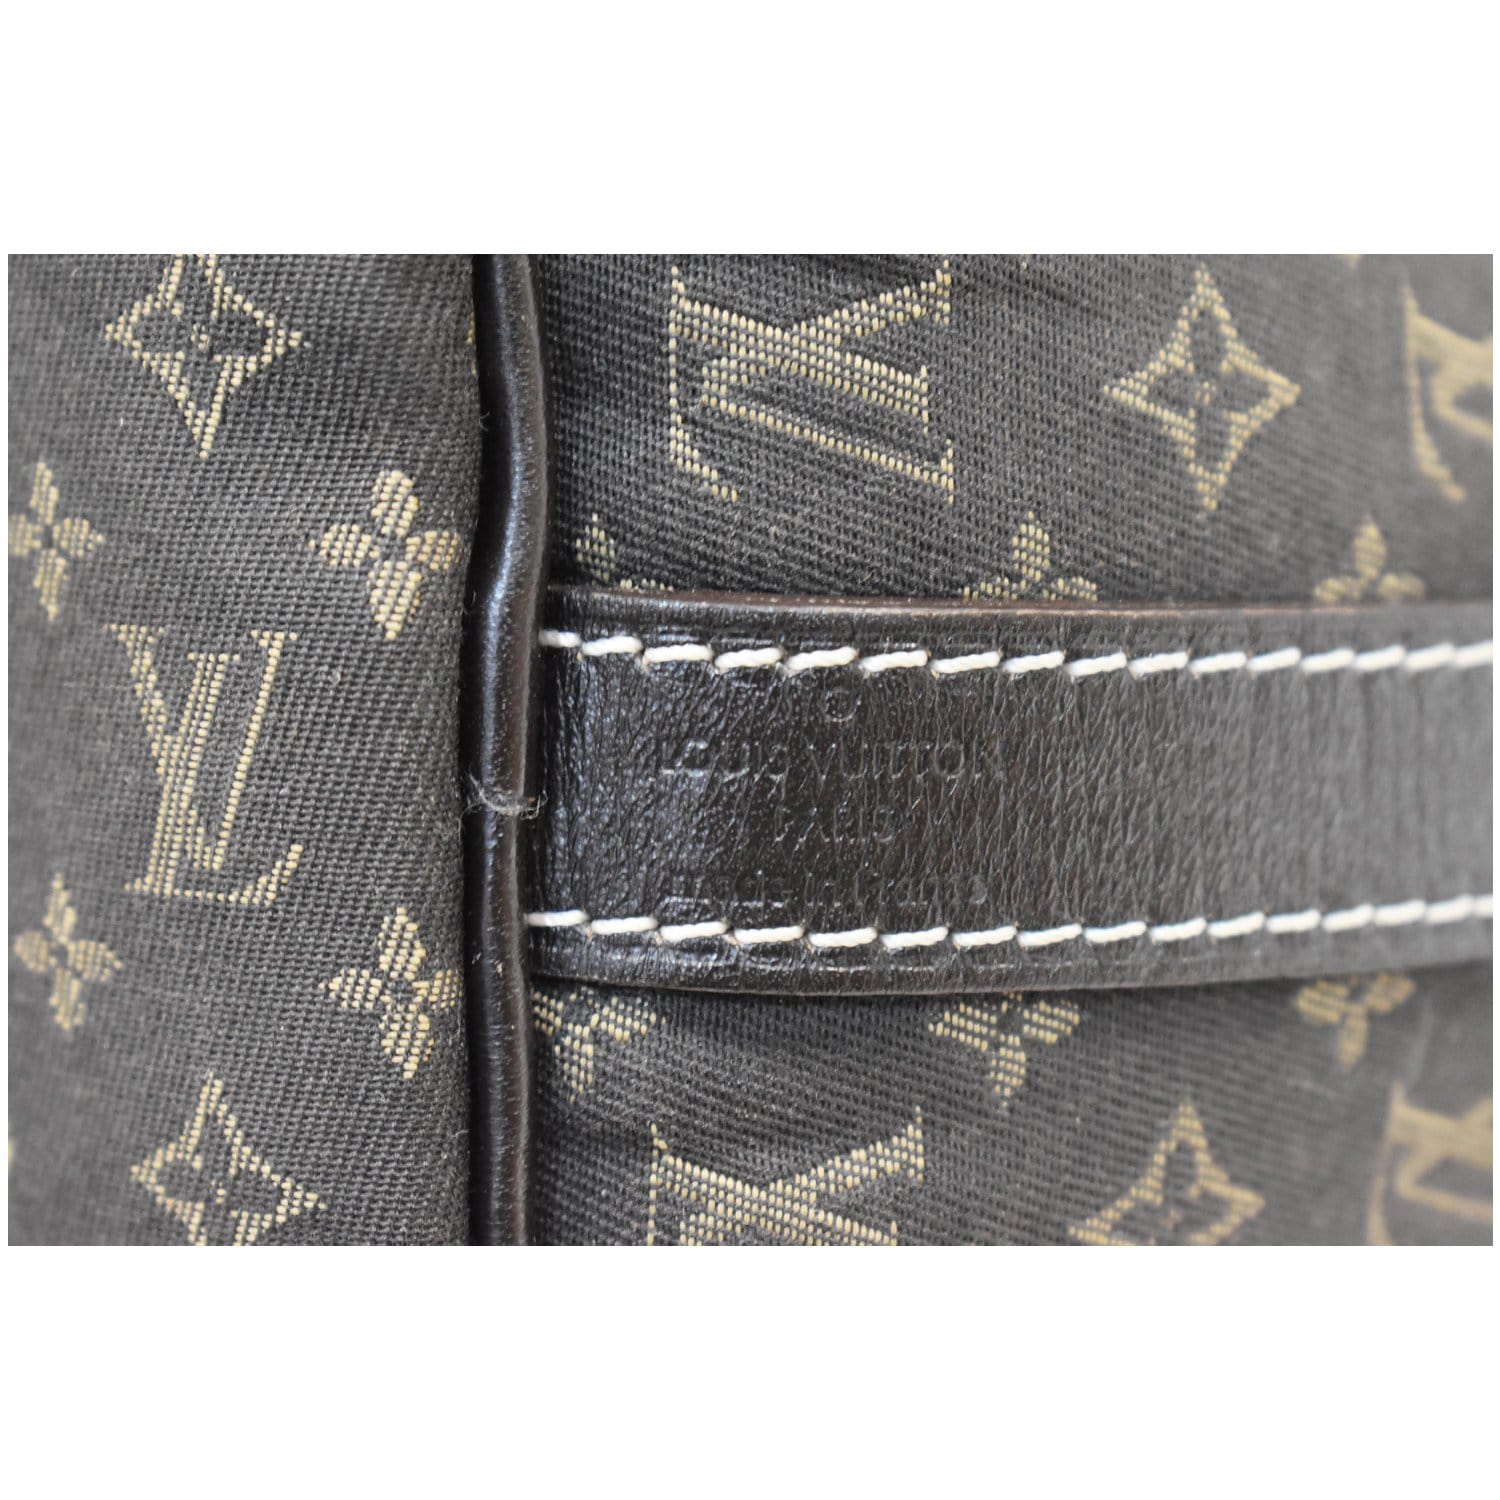 Louis Vuitton Brown Speedy Handbag Mini Lin 30 One Size - 40% off